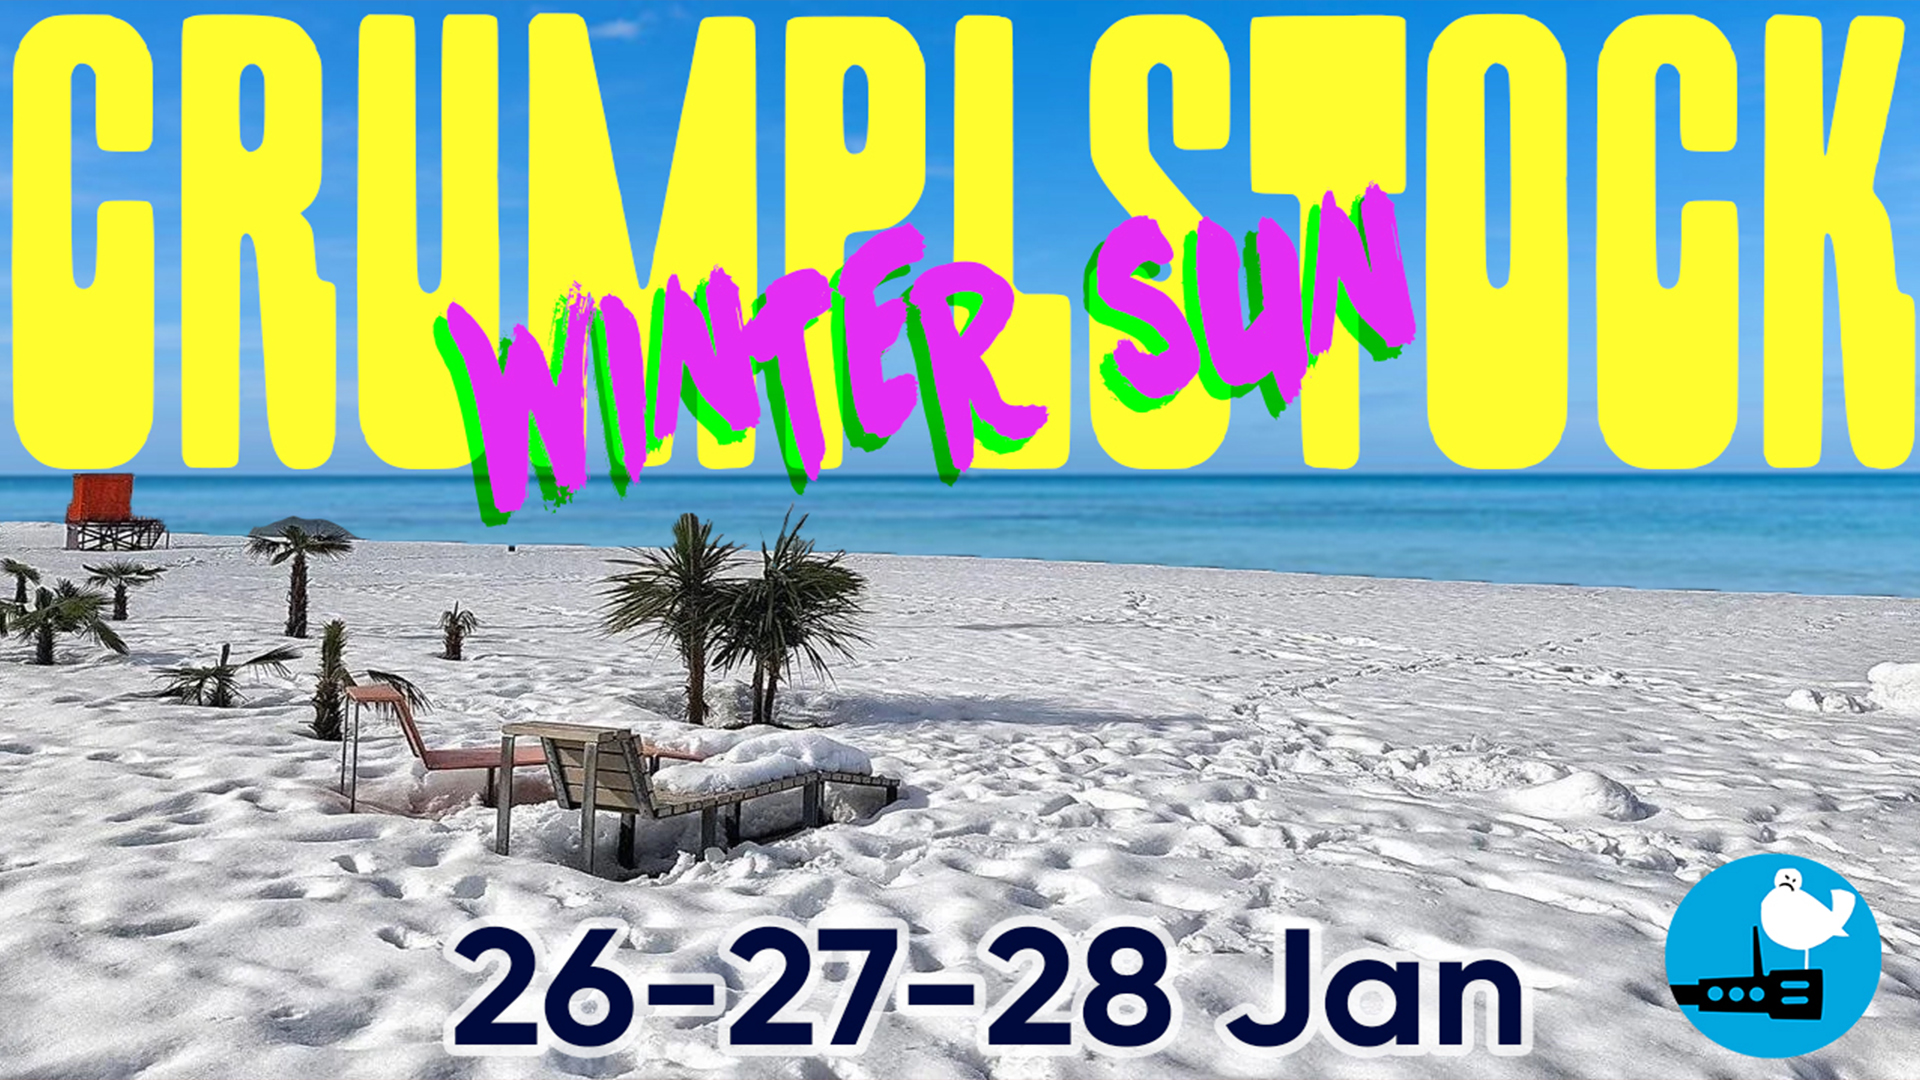 Crumplstock 12: Winter Sun - 26-27- 28 Jan